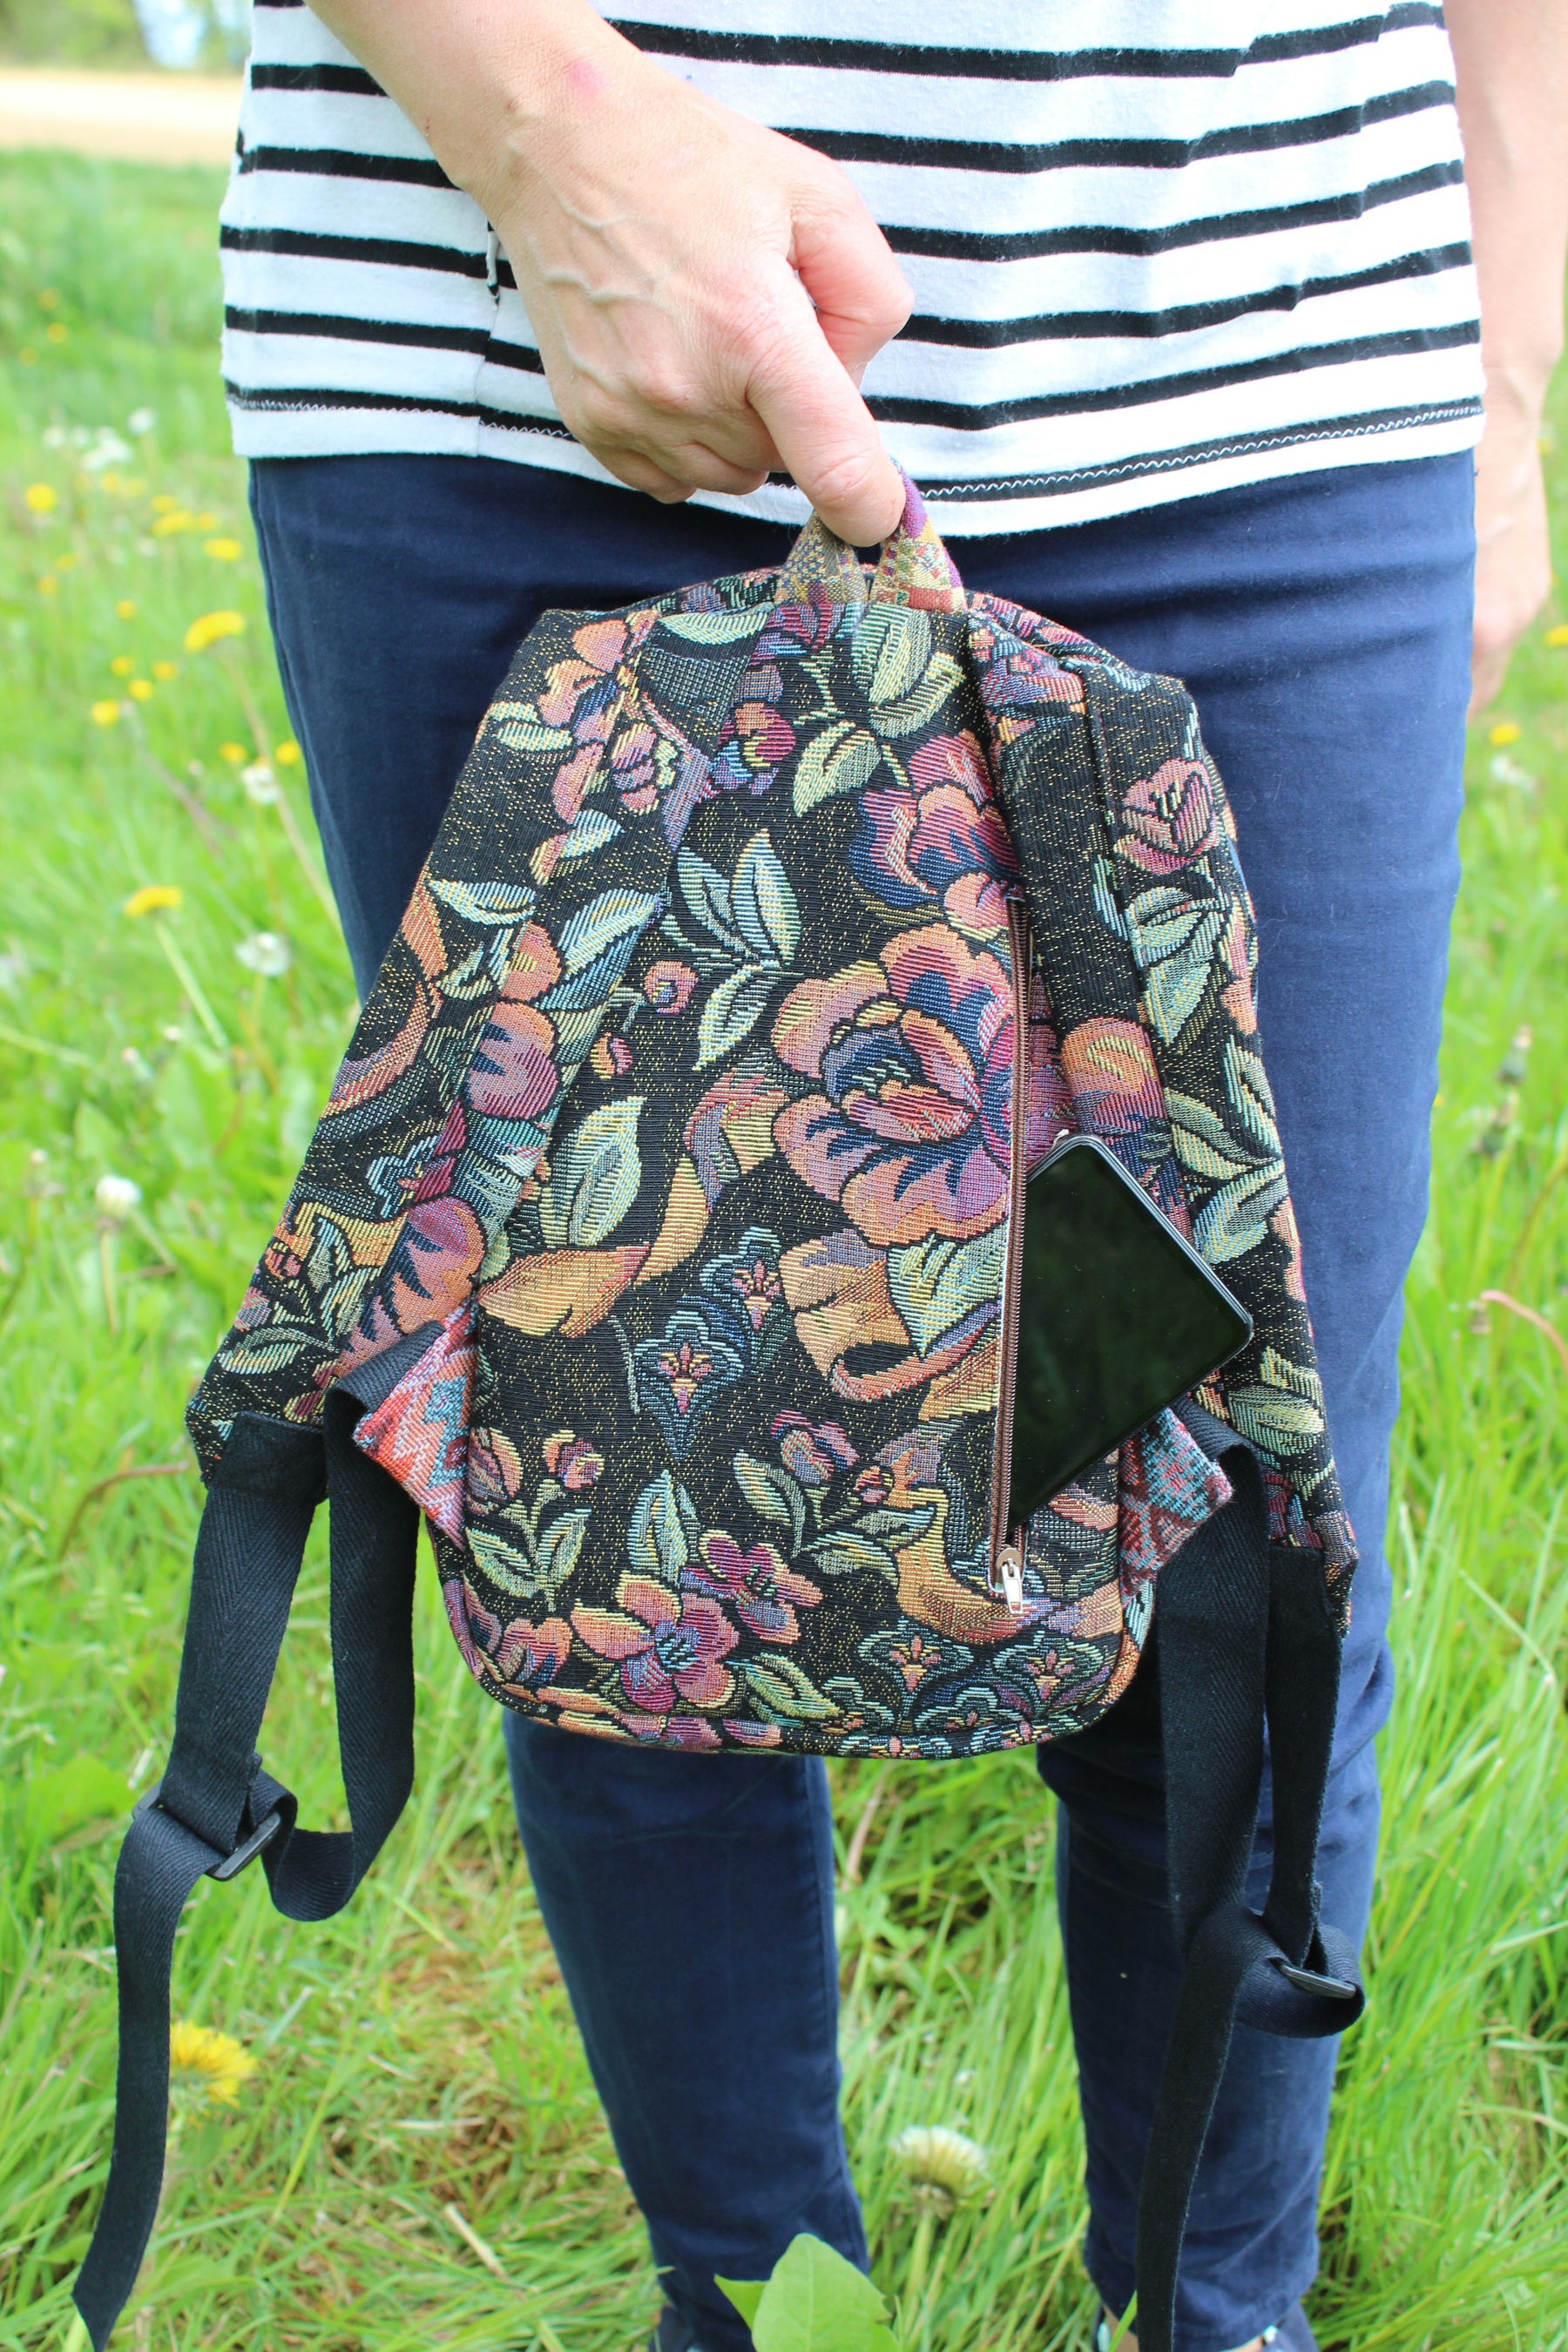 4.1 Speedy Convertible Bag sewing pattern - Sew Modern Bags